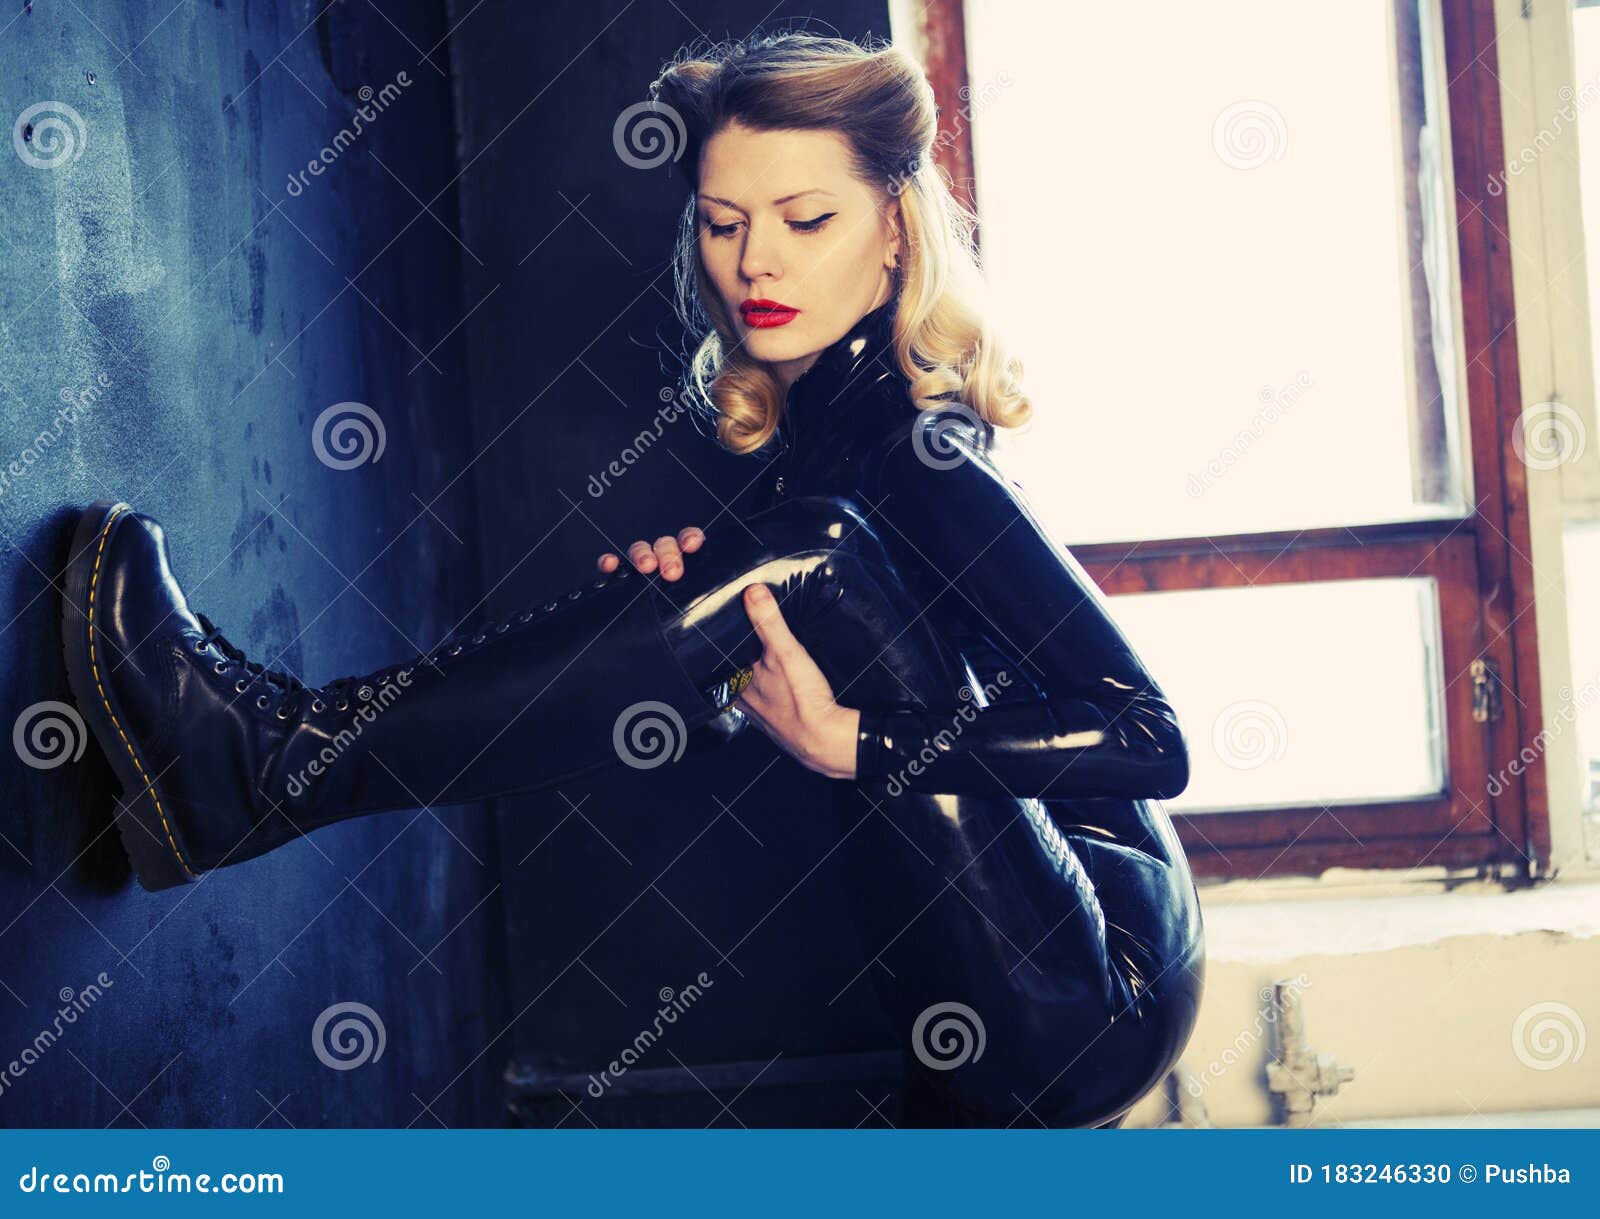 Blonde girl smoking in long latex gloves